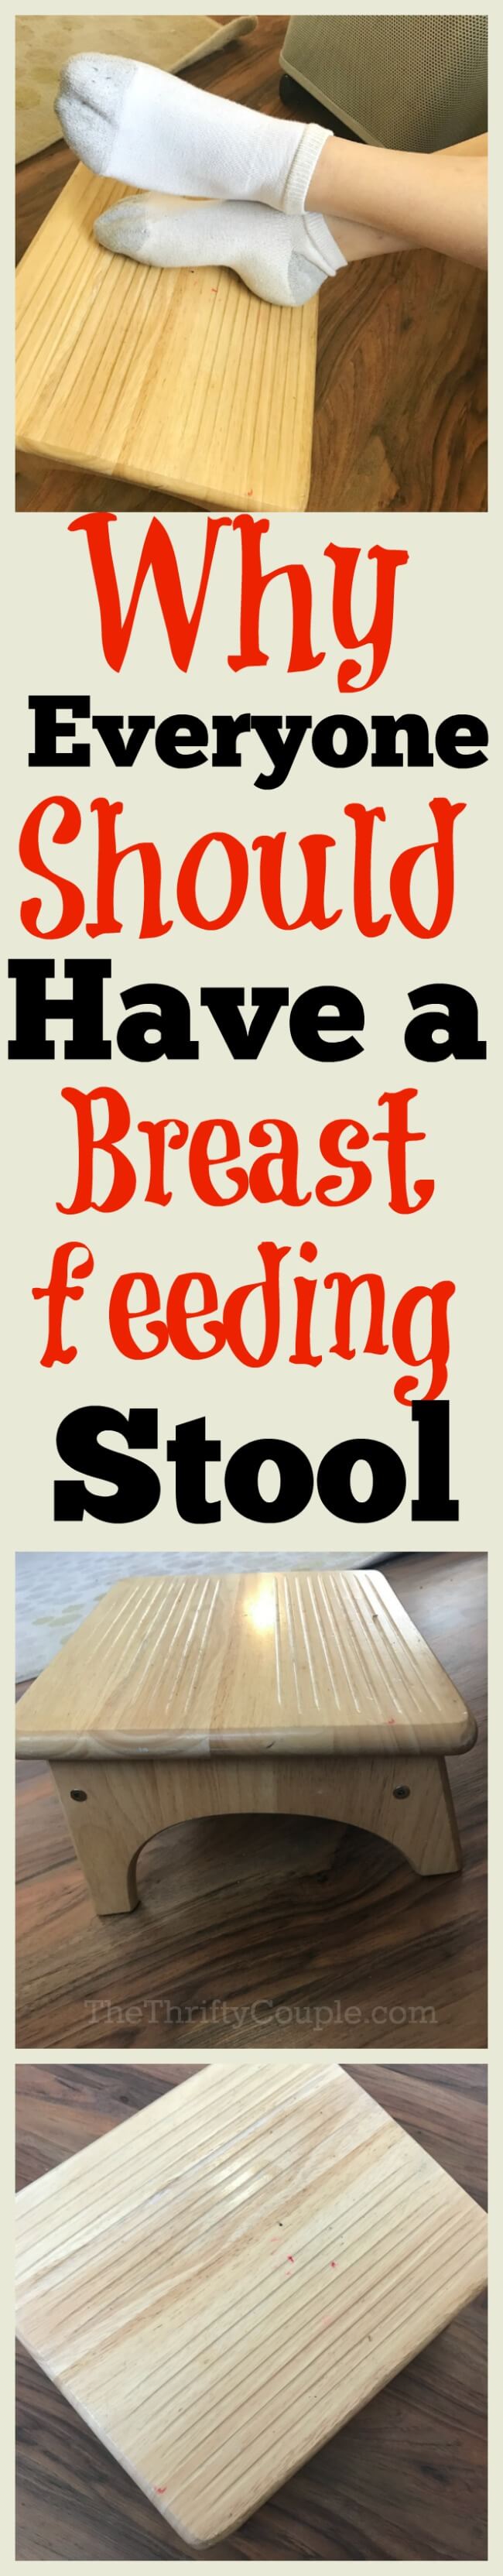 breastfeeding stool